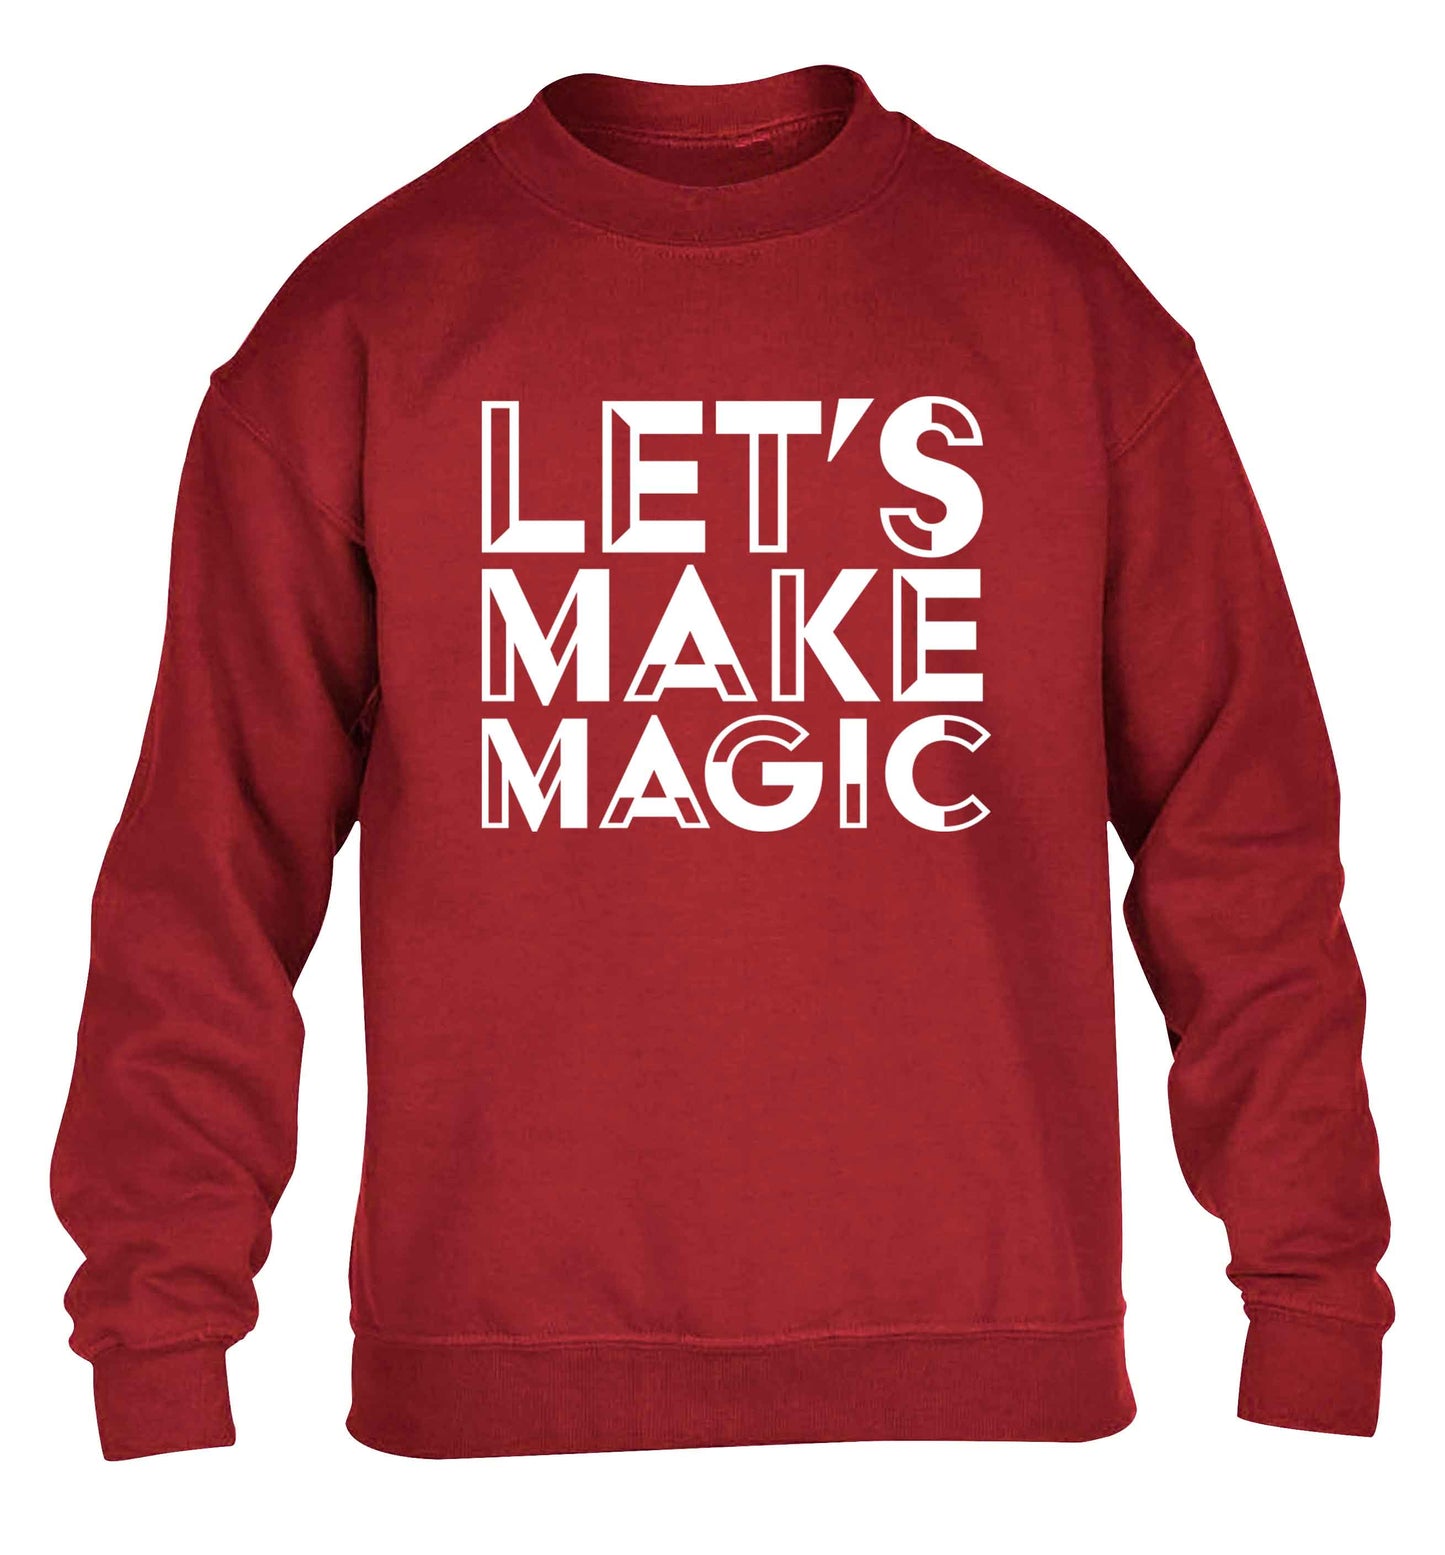 Let's make magic children's grey sweater 12-13 Years